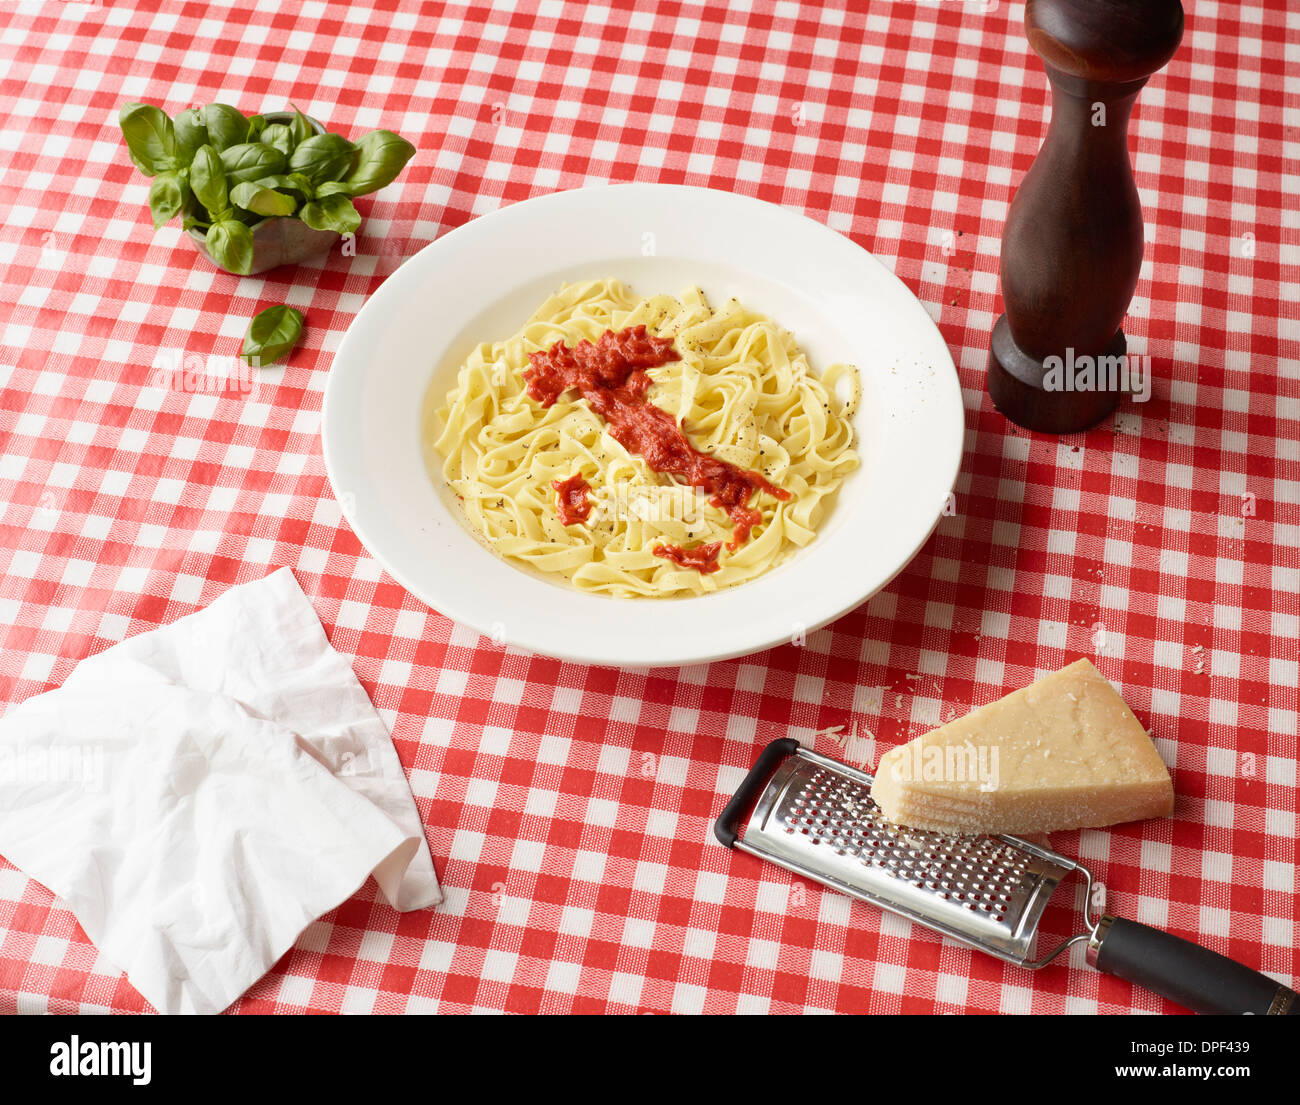 Tomato pasta sauce in shape of Italy Stock Photo